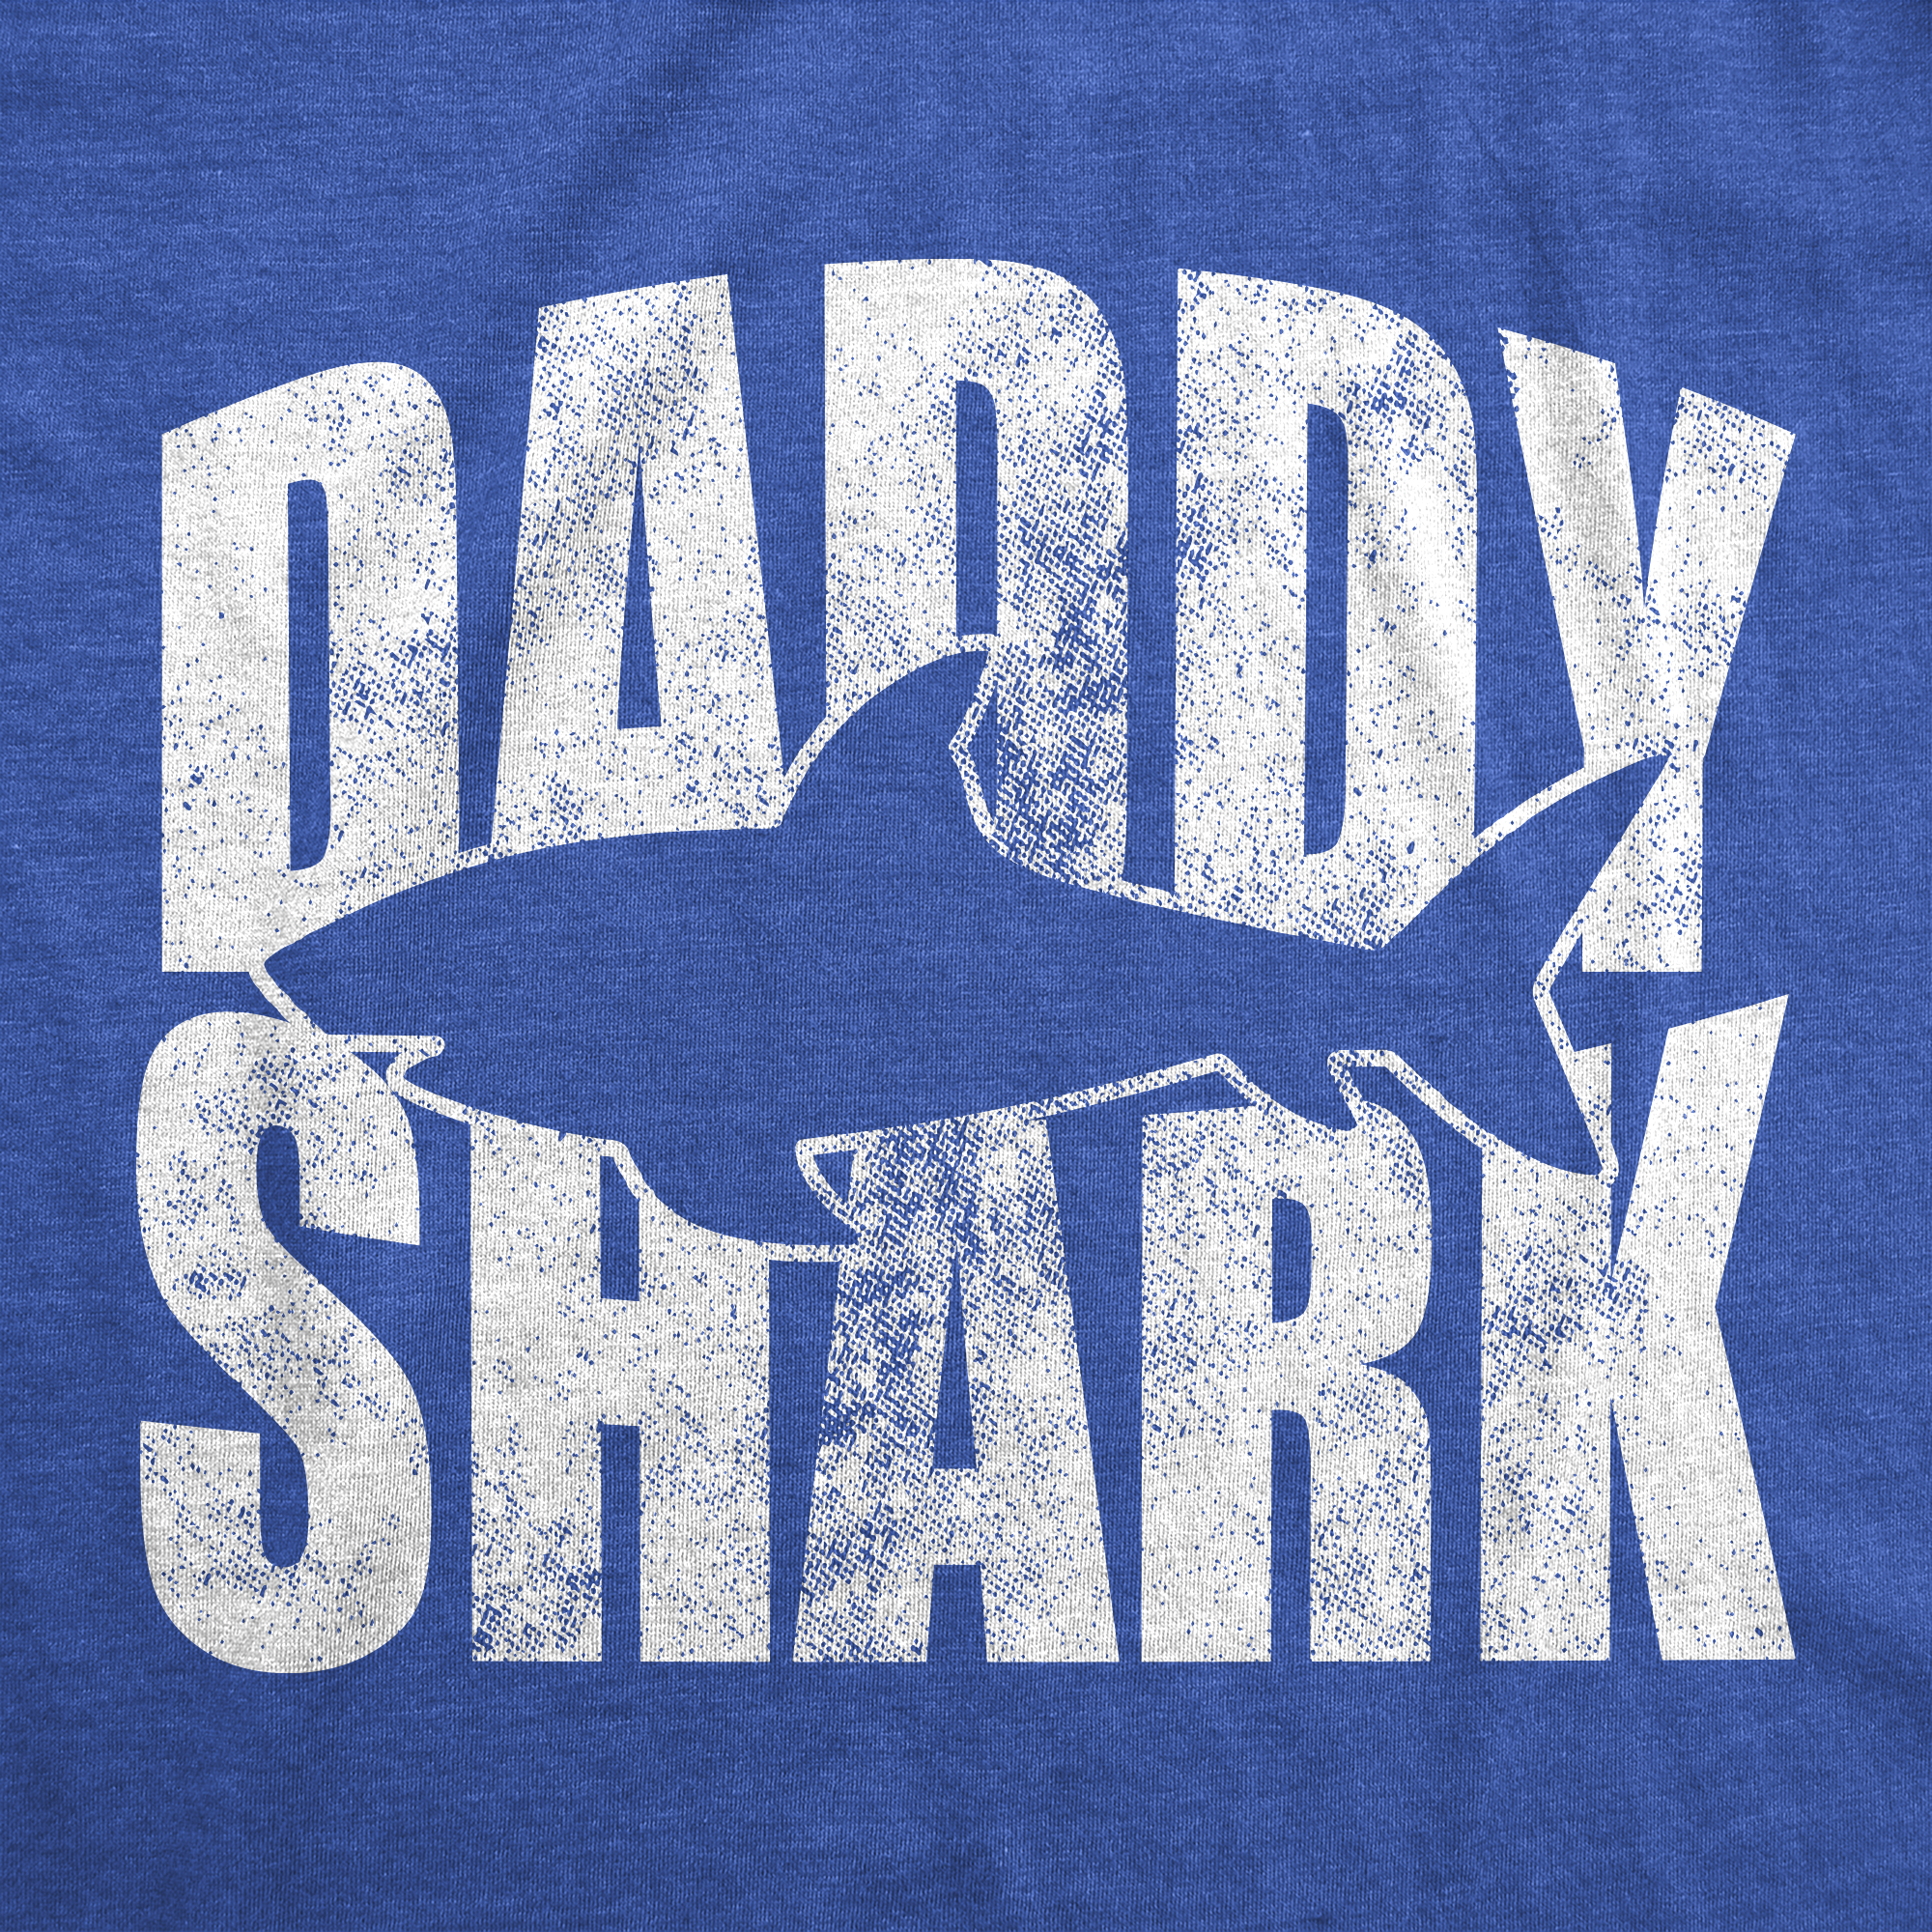 Funny Heather Royal - Daddy Shark Silhouette Daddy Shark Silhouette Mens T Shirt Nerdy Father's Day animal Tee